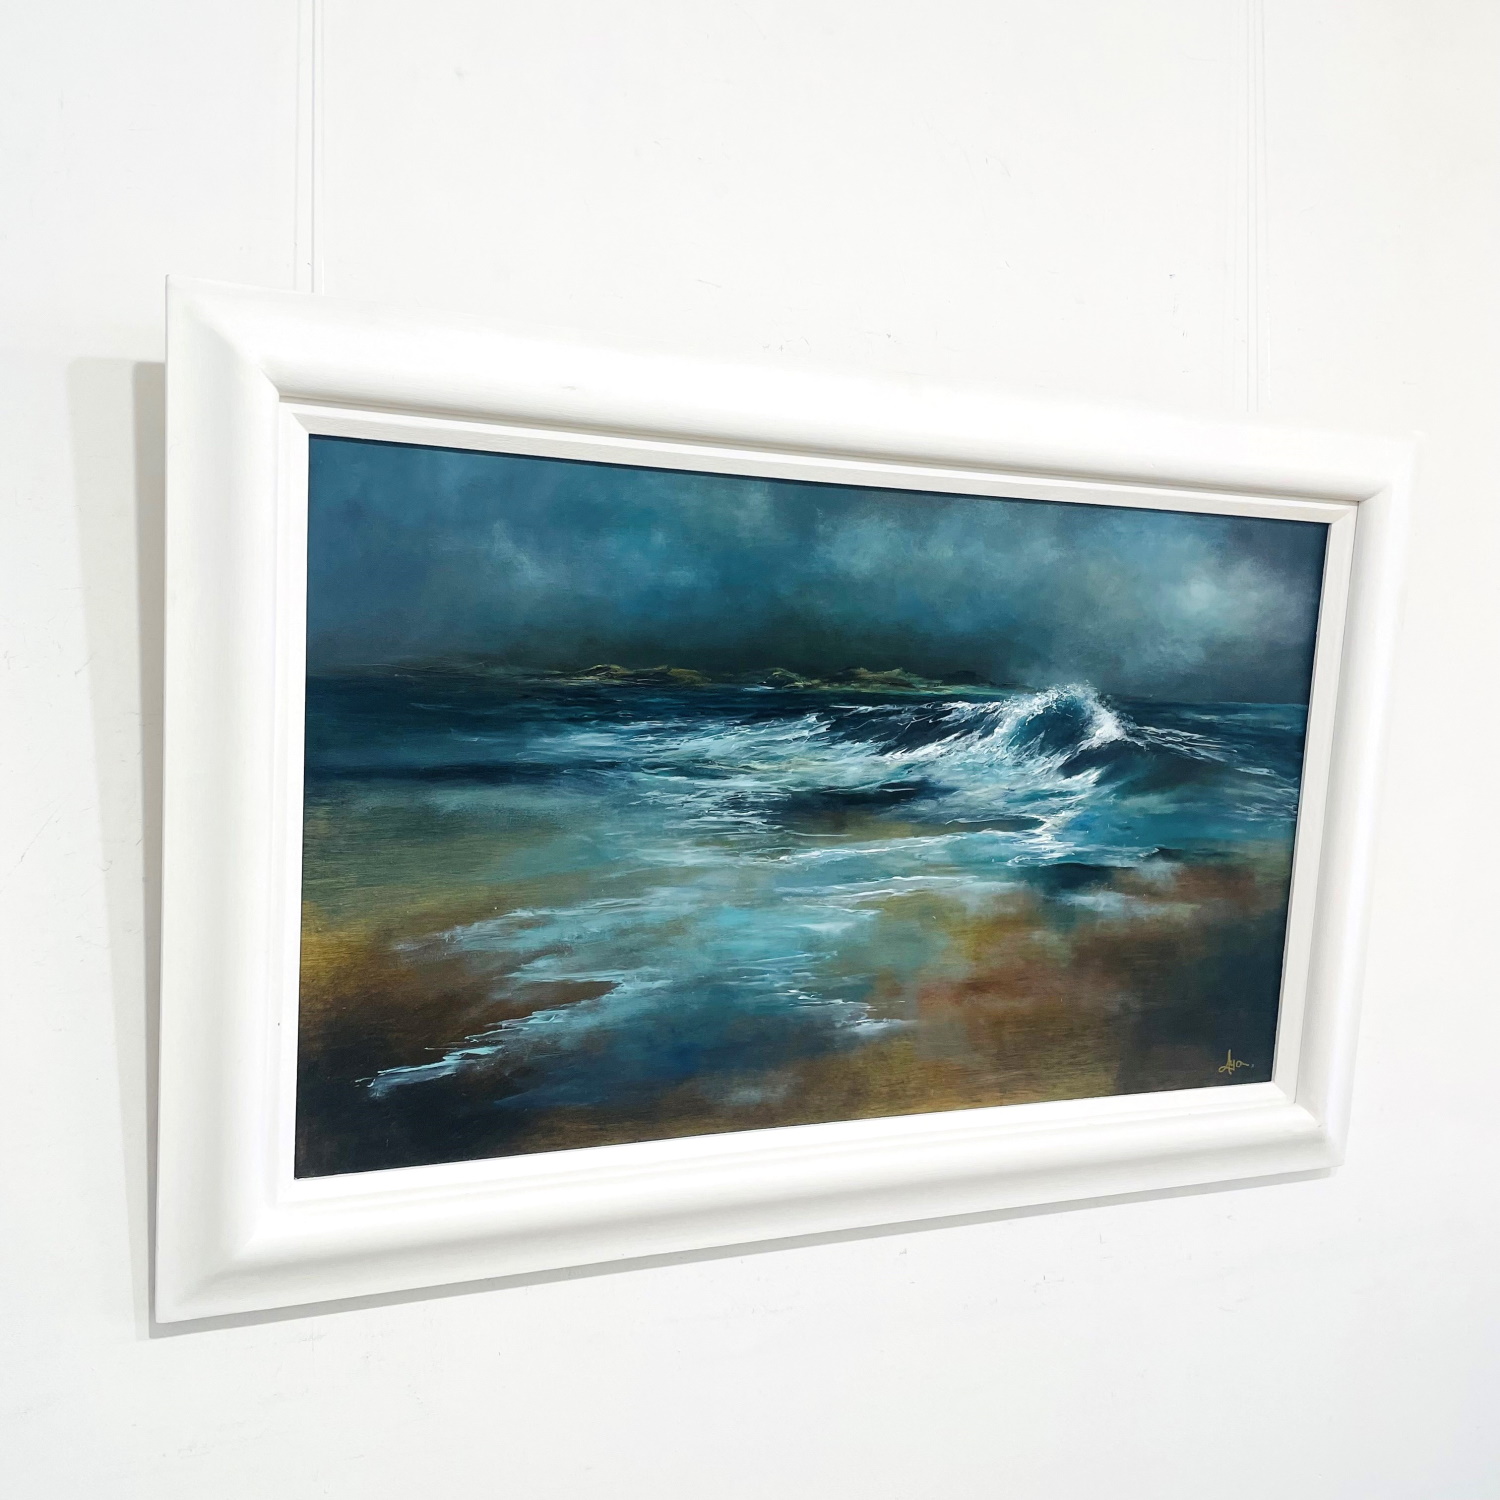 'Reaching Shore, Seamill' by artist Alison Lyon